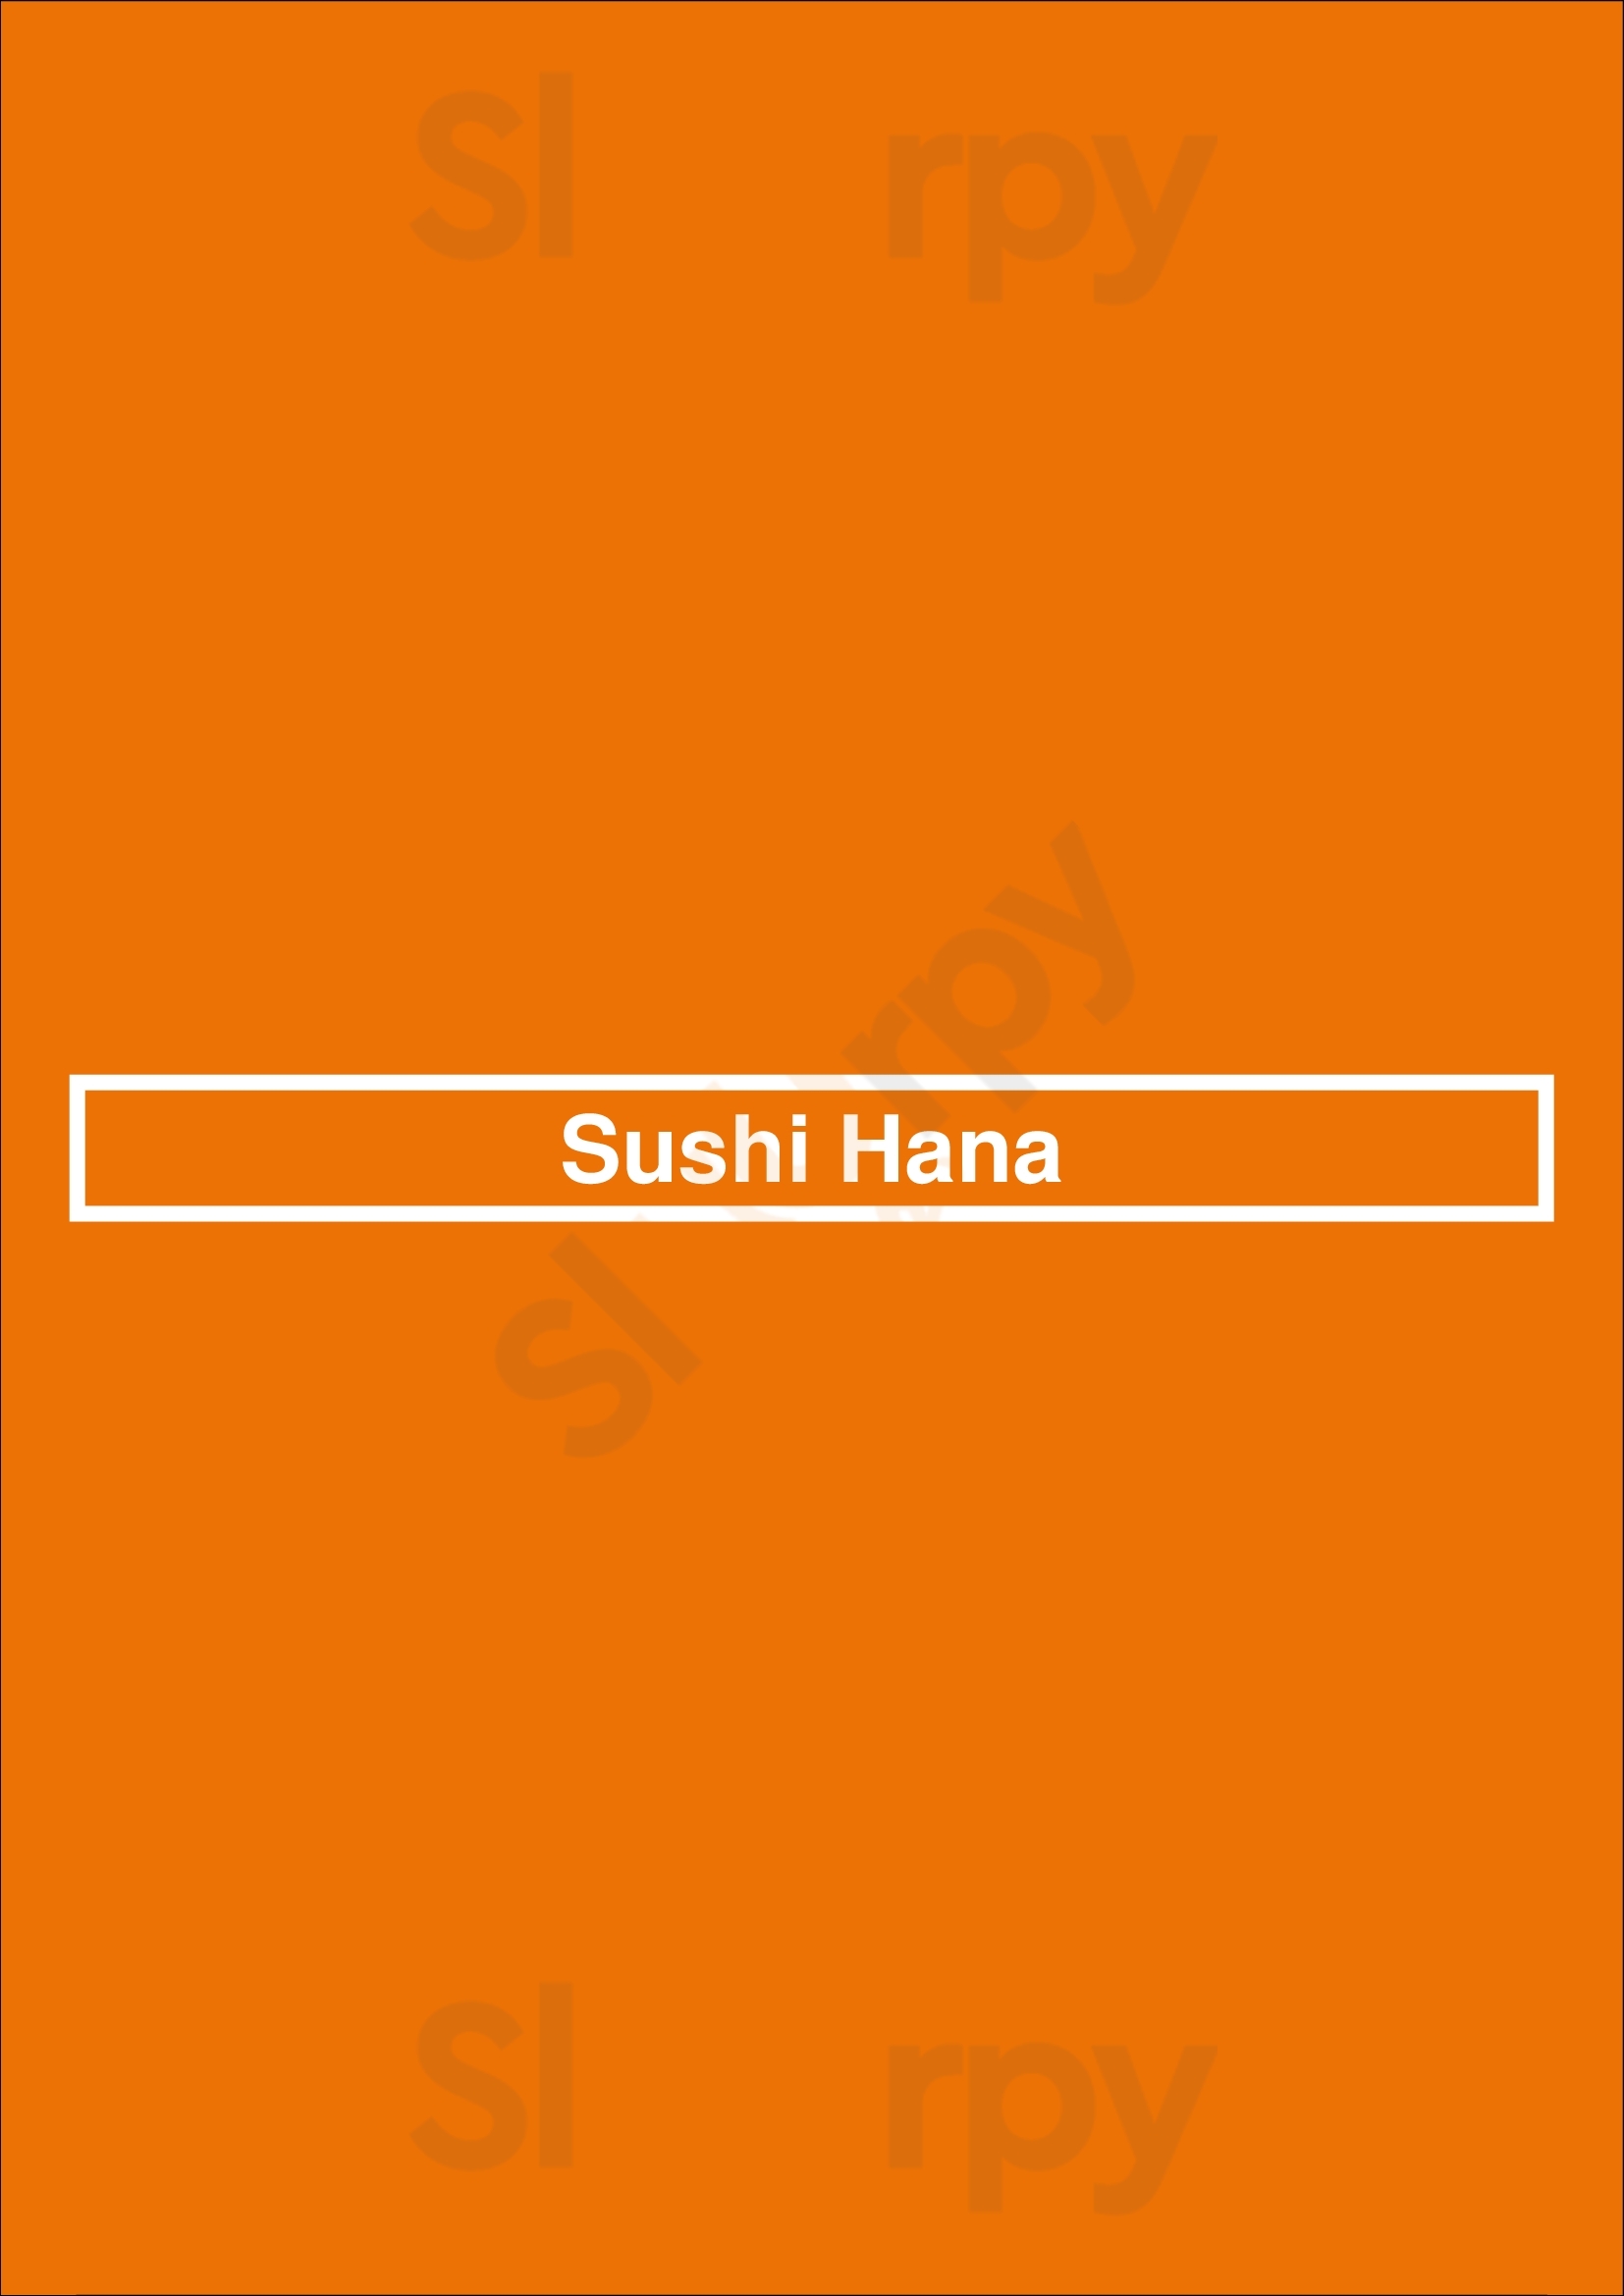 Sushi Hana Richmond Menu - 1